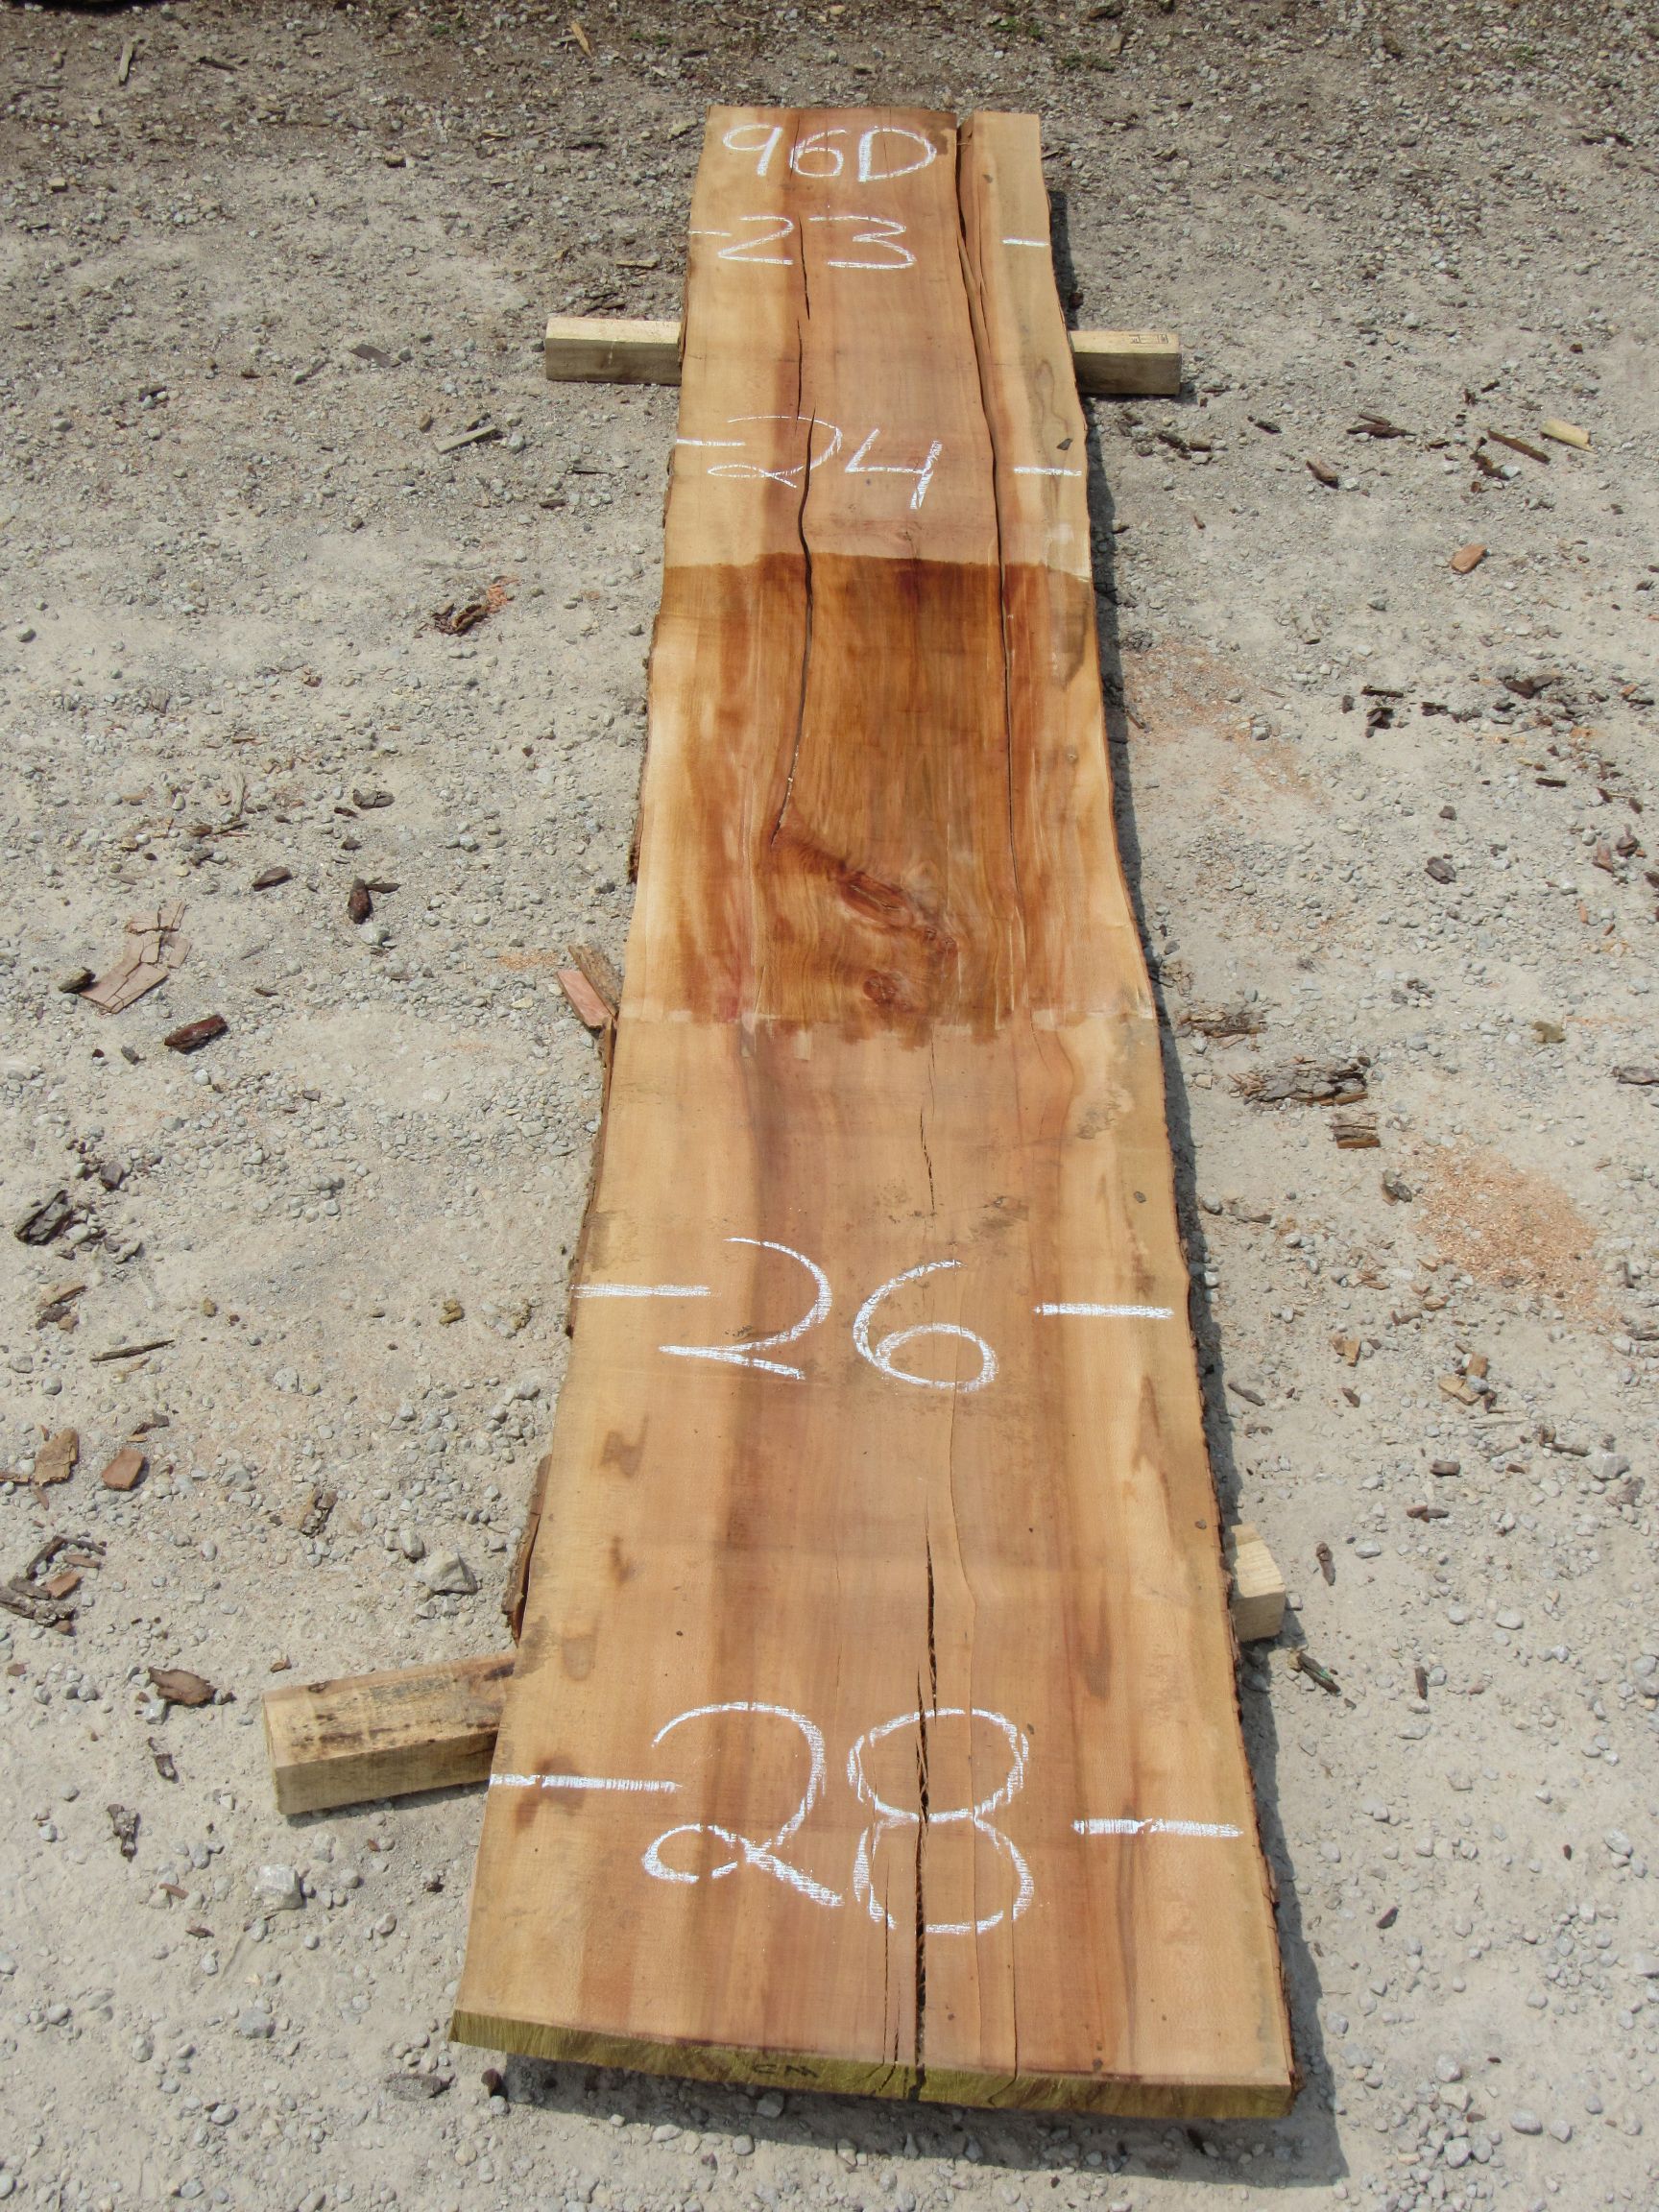 Cherry Live Edge Slab 166G - CR Muterspaw Lumber